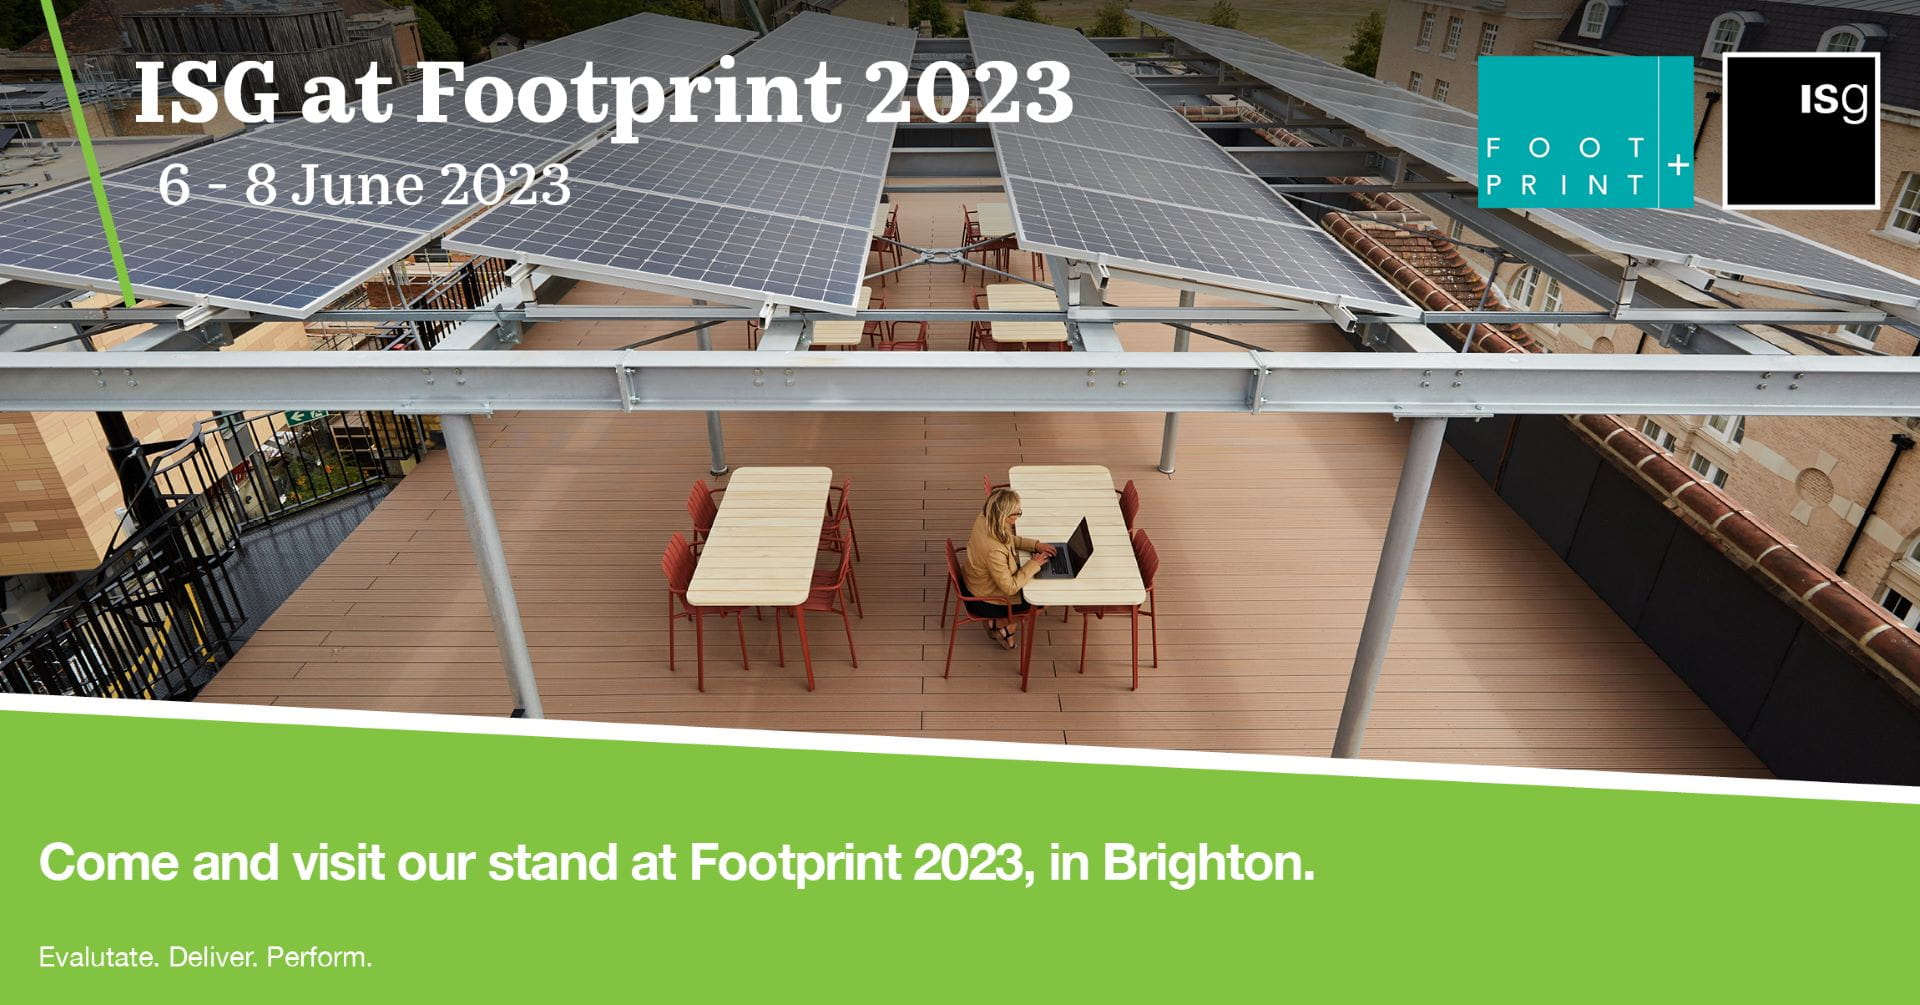 Footprint plus event 2023 - ISG